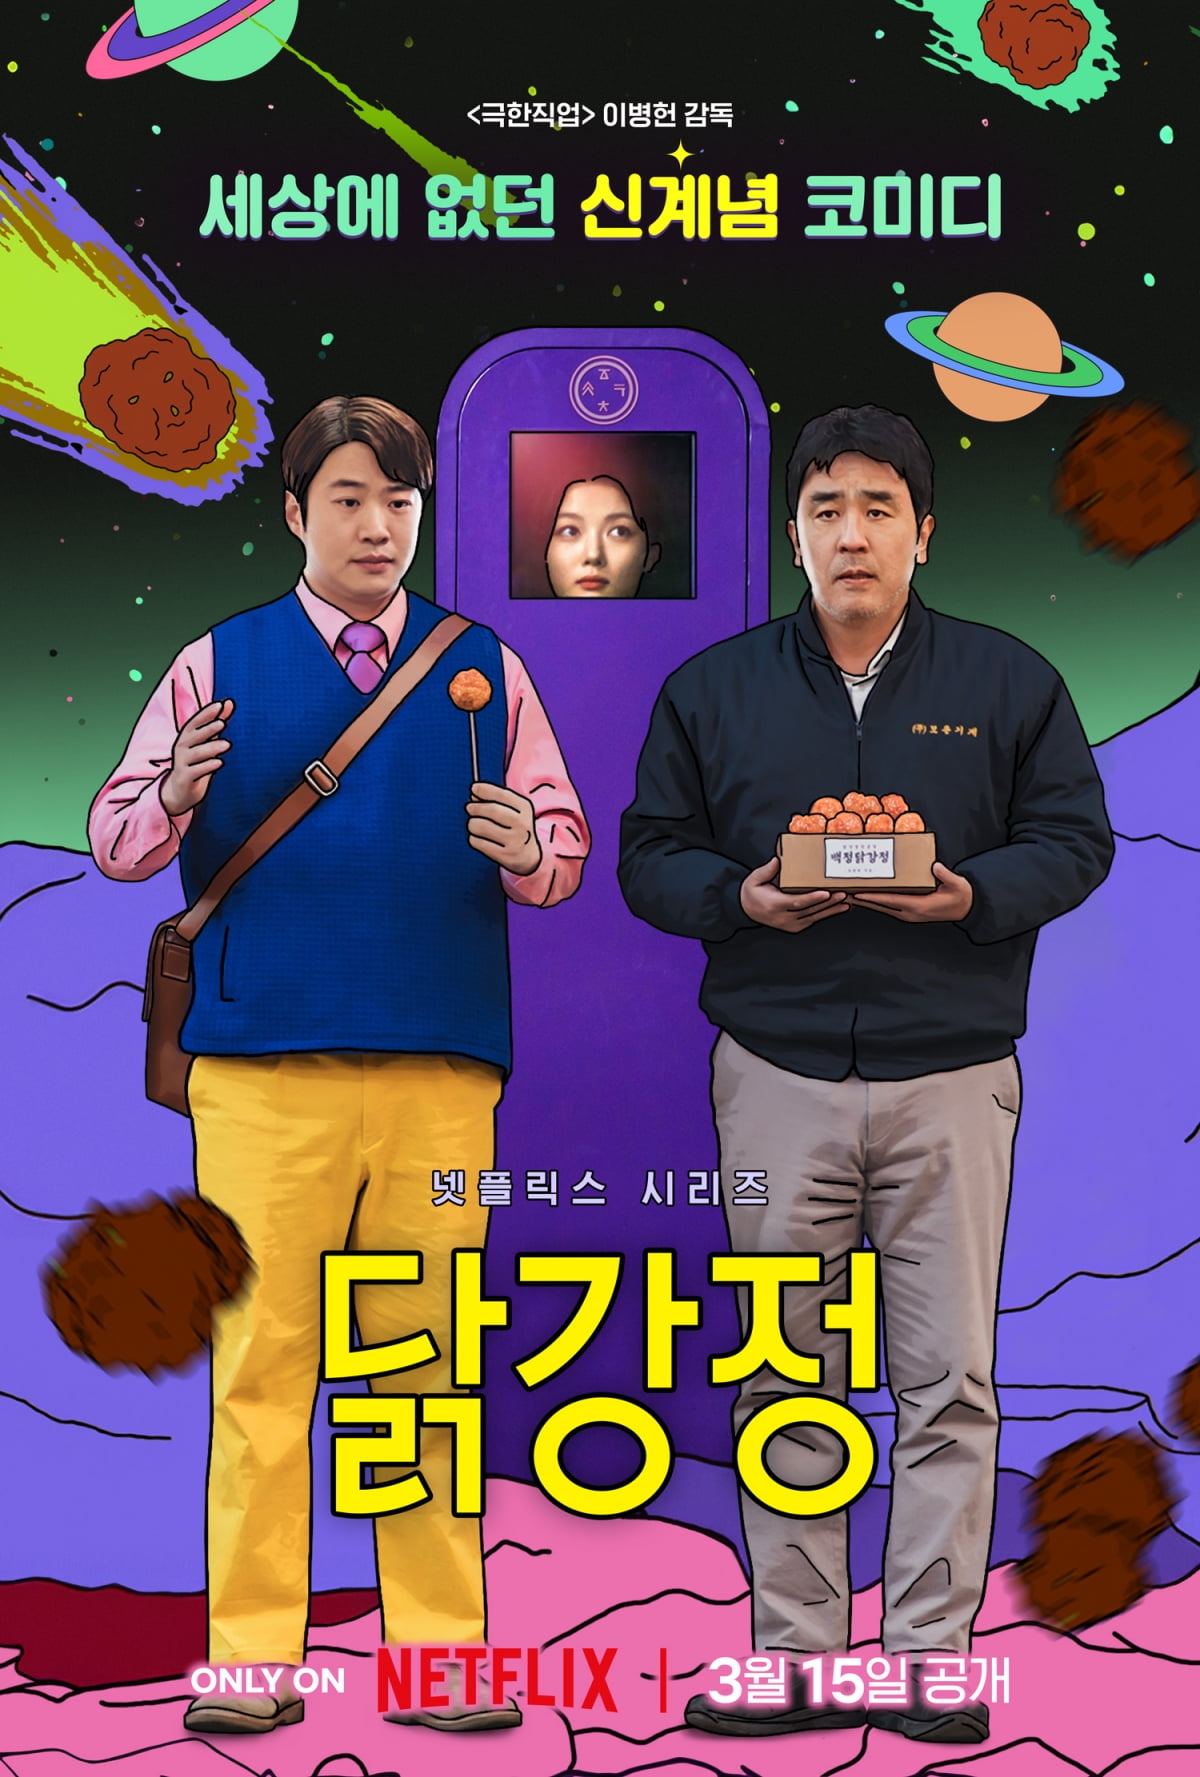 Netflix's 'Dak Gangjeong' Ryu Seung-ryong and Ahn Jae-hong, a new world comedy that makes you laugh